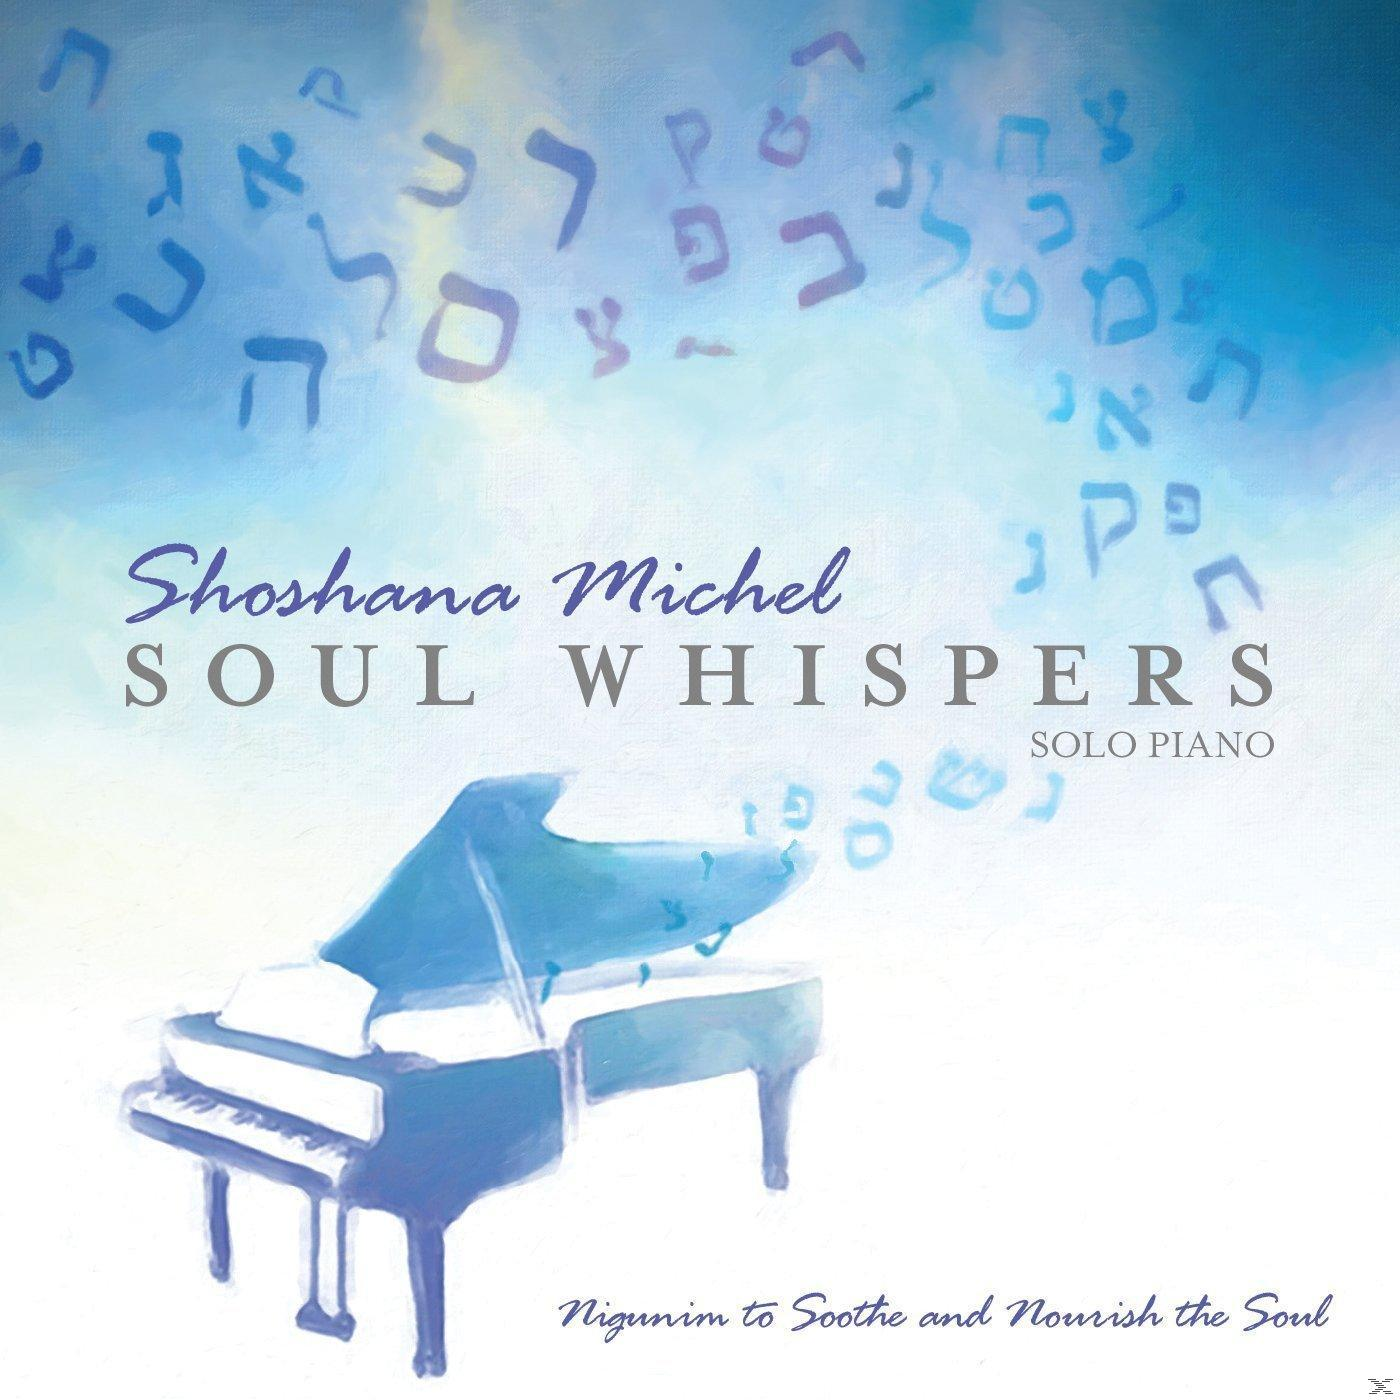 Shoshana Michel - SOUL WHISPERS - (CD)